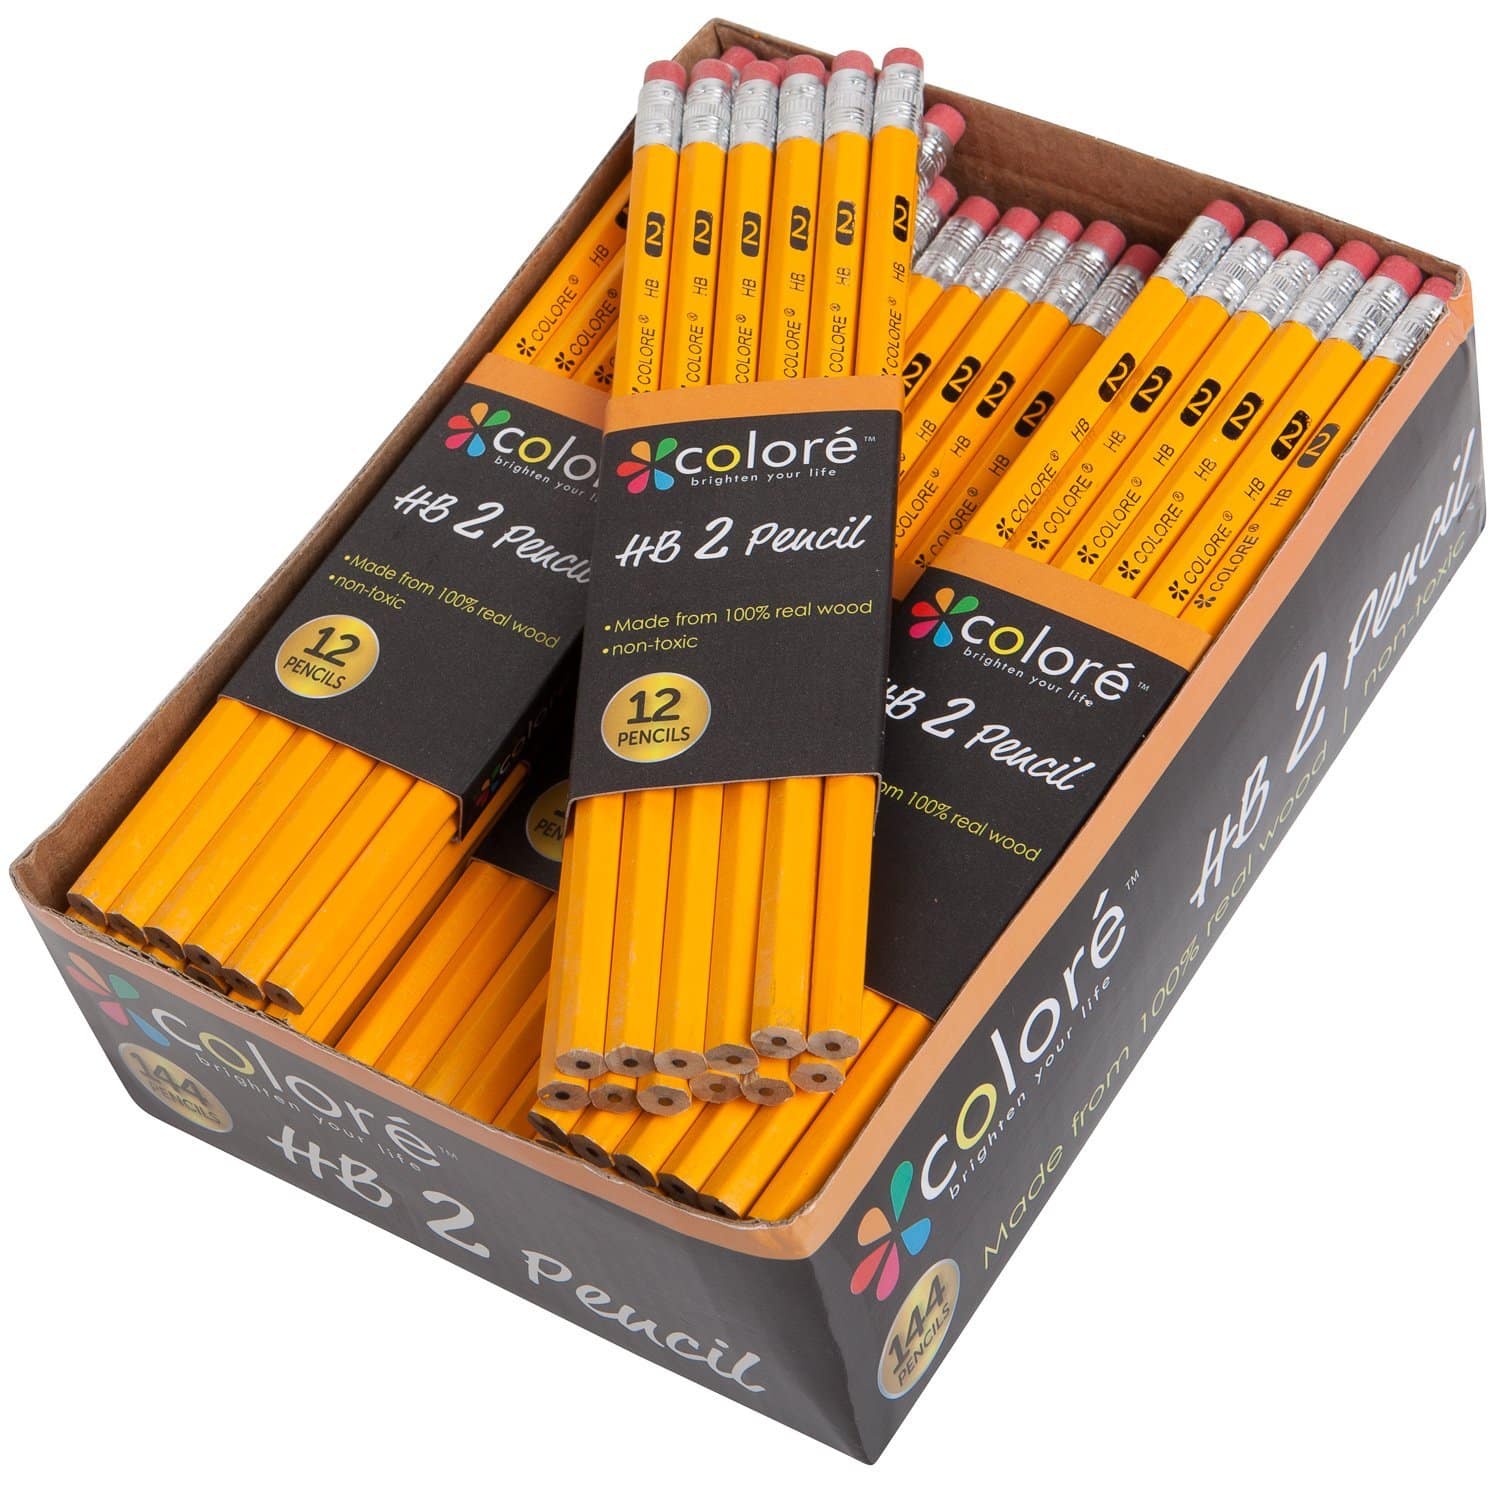 DEAL ALERT: Colore HB 2 Pencils with Eraser (144-Piece) – 52%